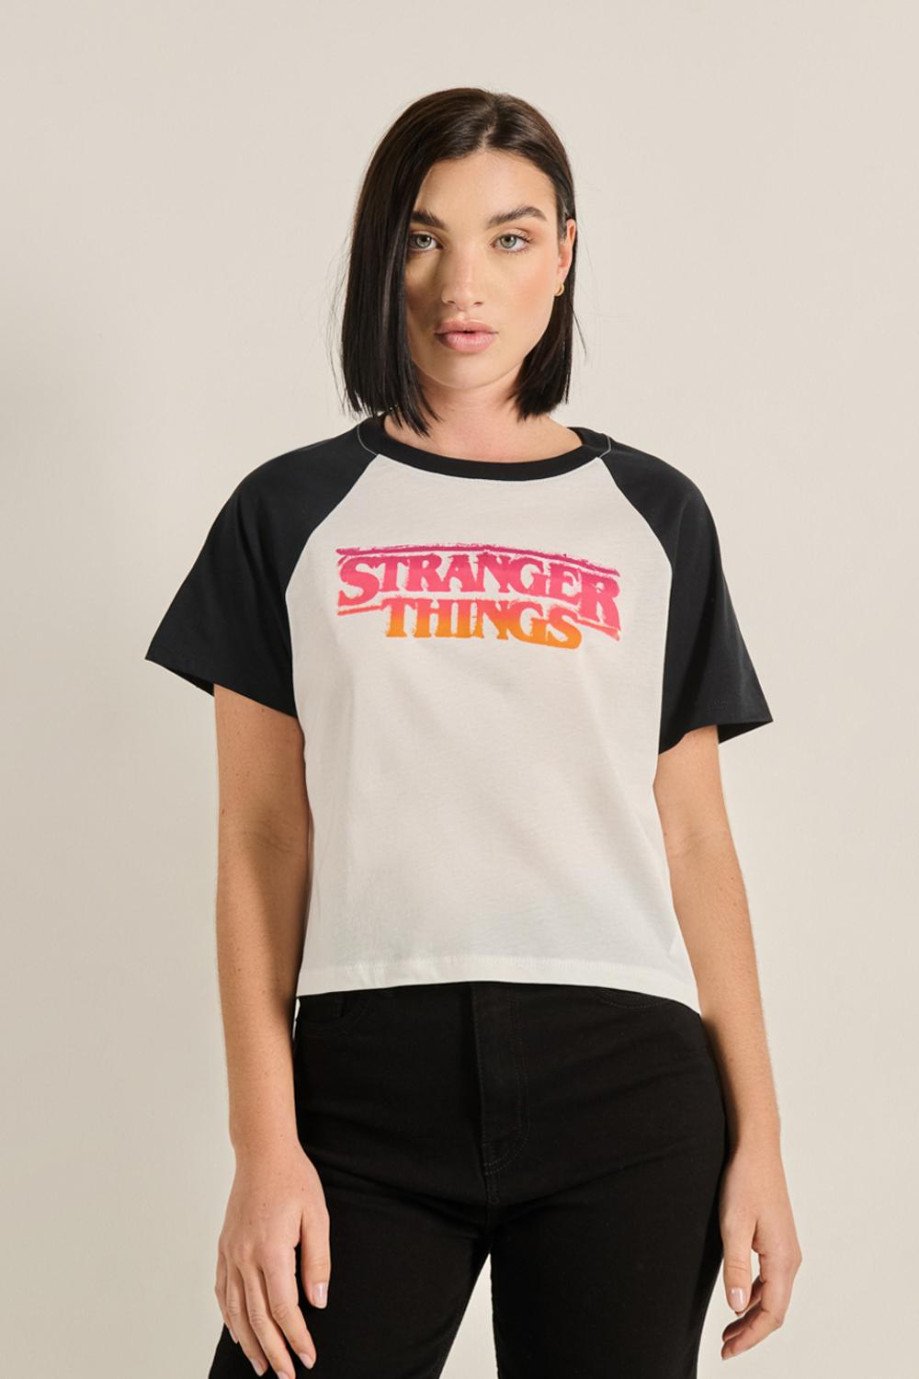 Camiseta manga corta en contraste estampada en frente de Stranger Things.